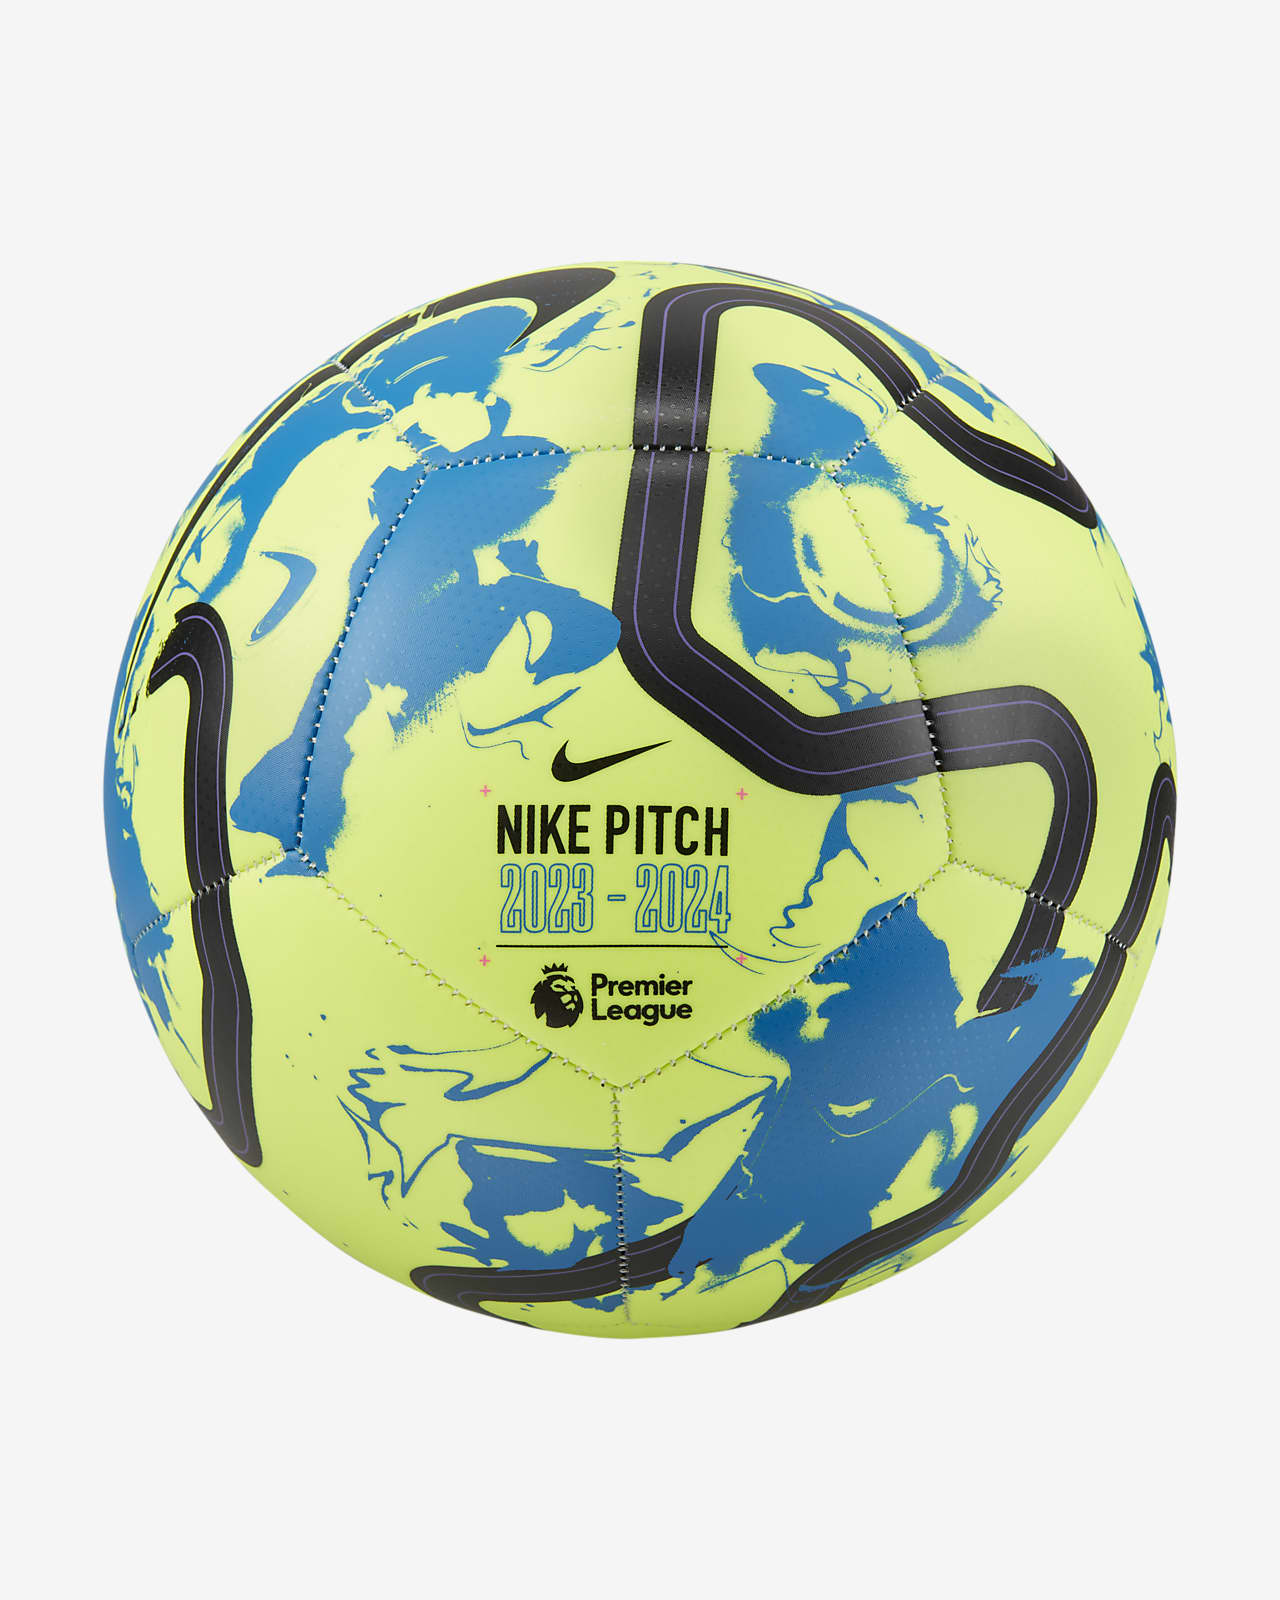 Premier League Pitch Soccer Ball.